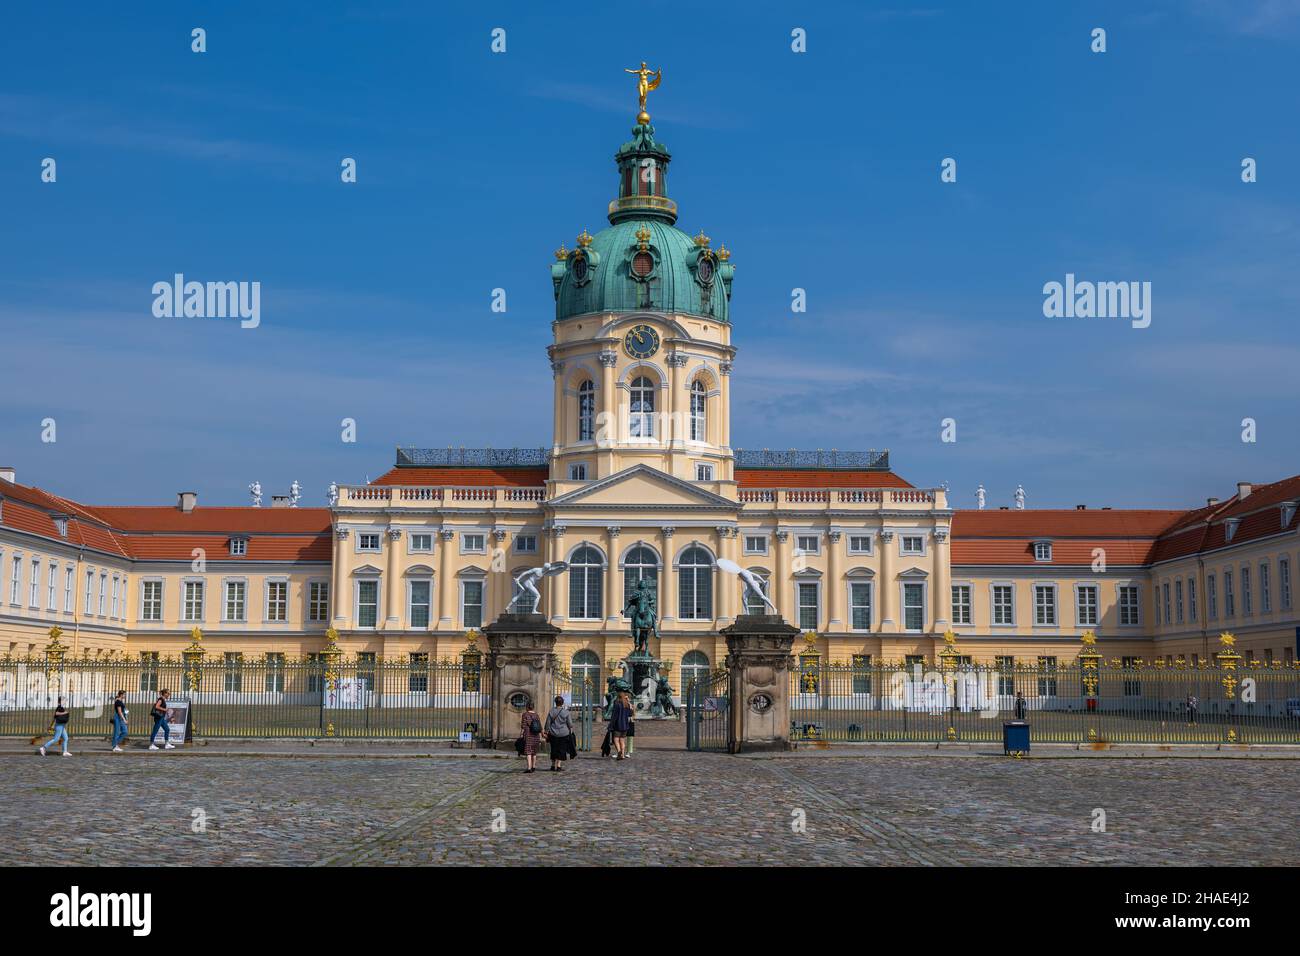 Charlottenburg Palace in Berlin, Germany, Baroque style city landmark from 17th century. Stock Photo